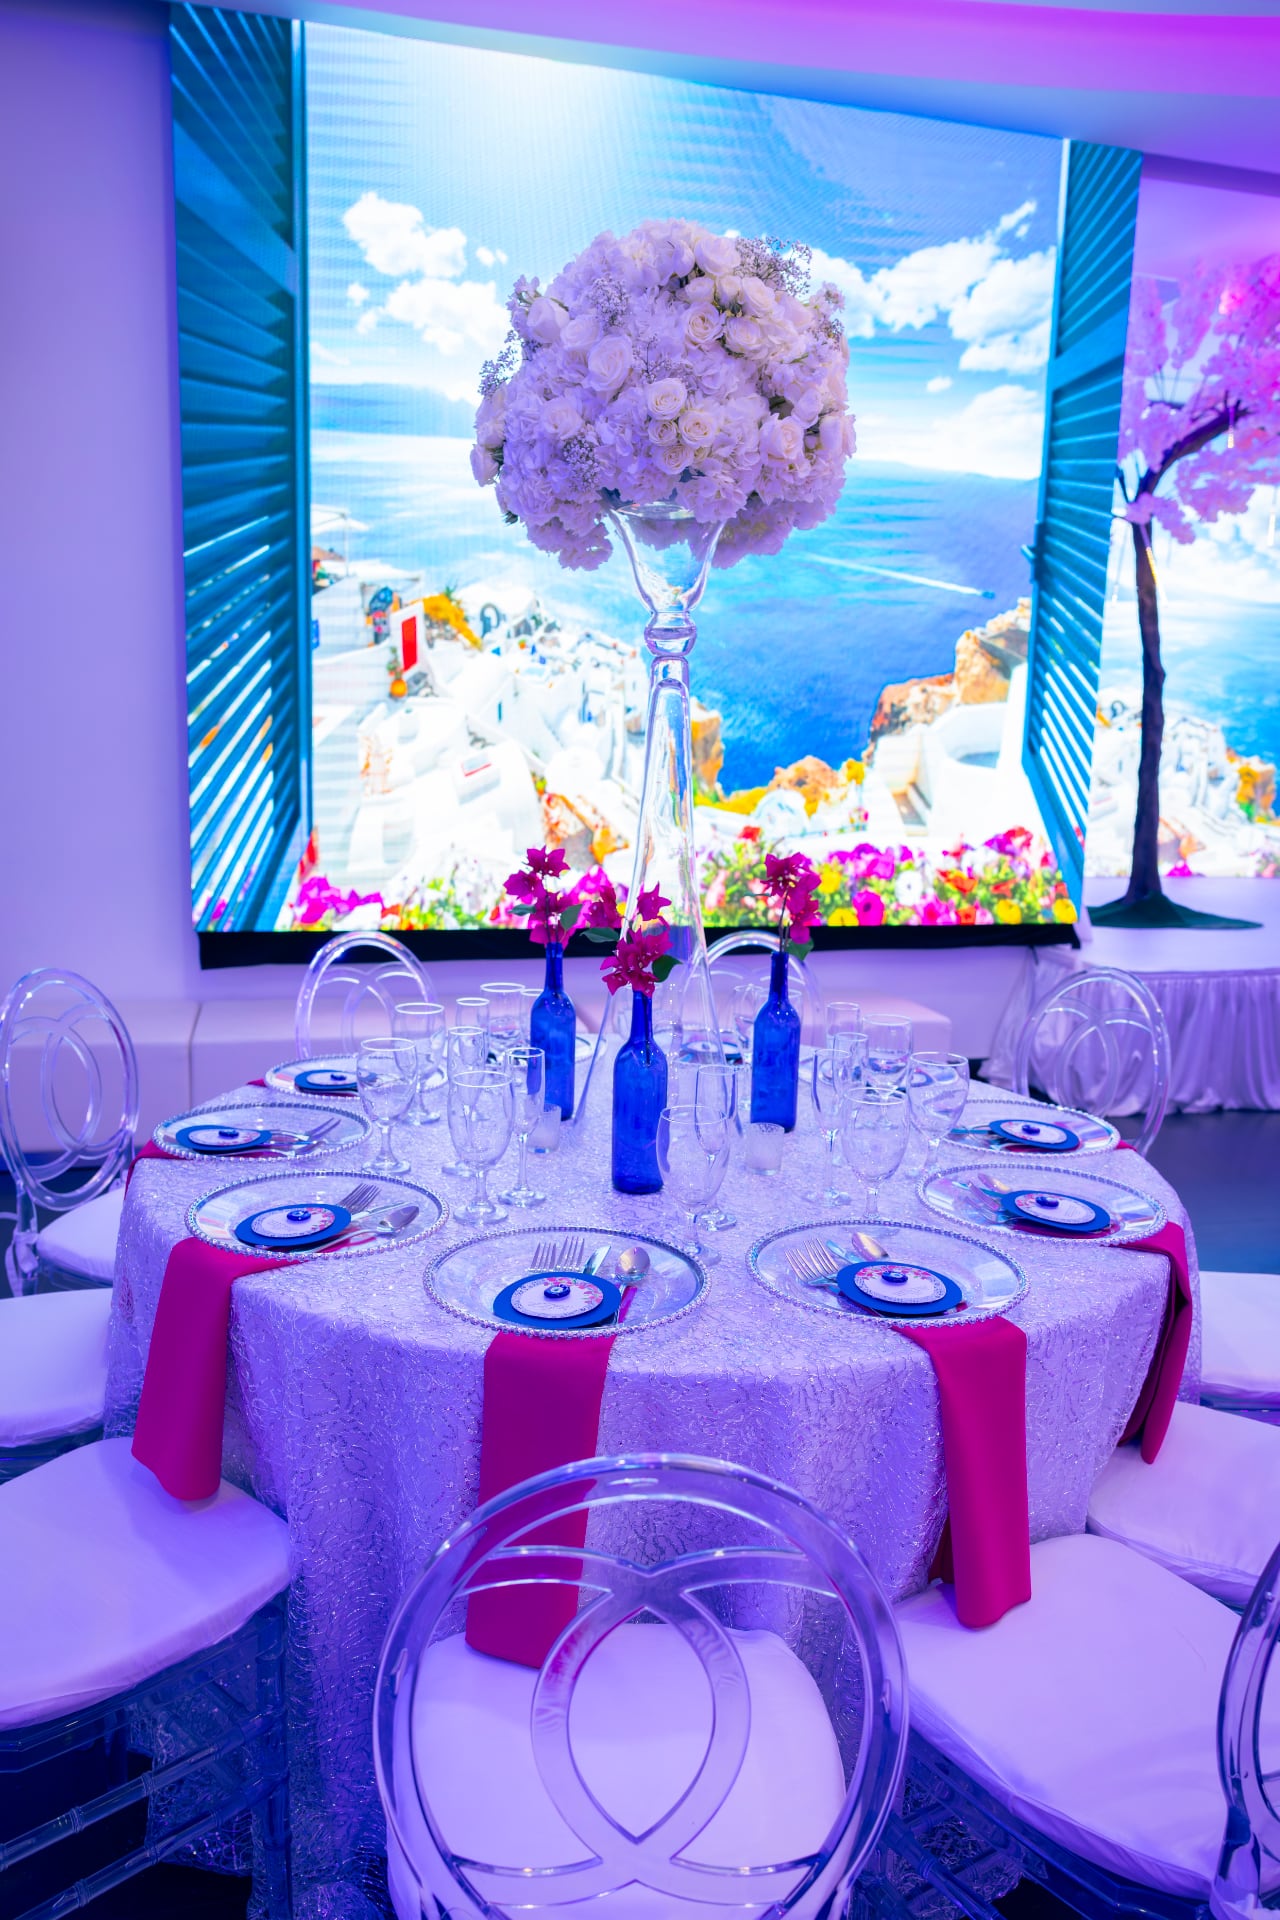 Greece Windows - Onyx Luxury Banquet Hall